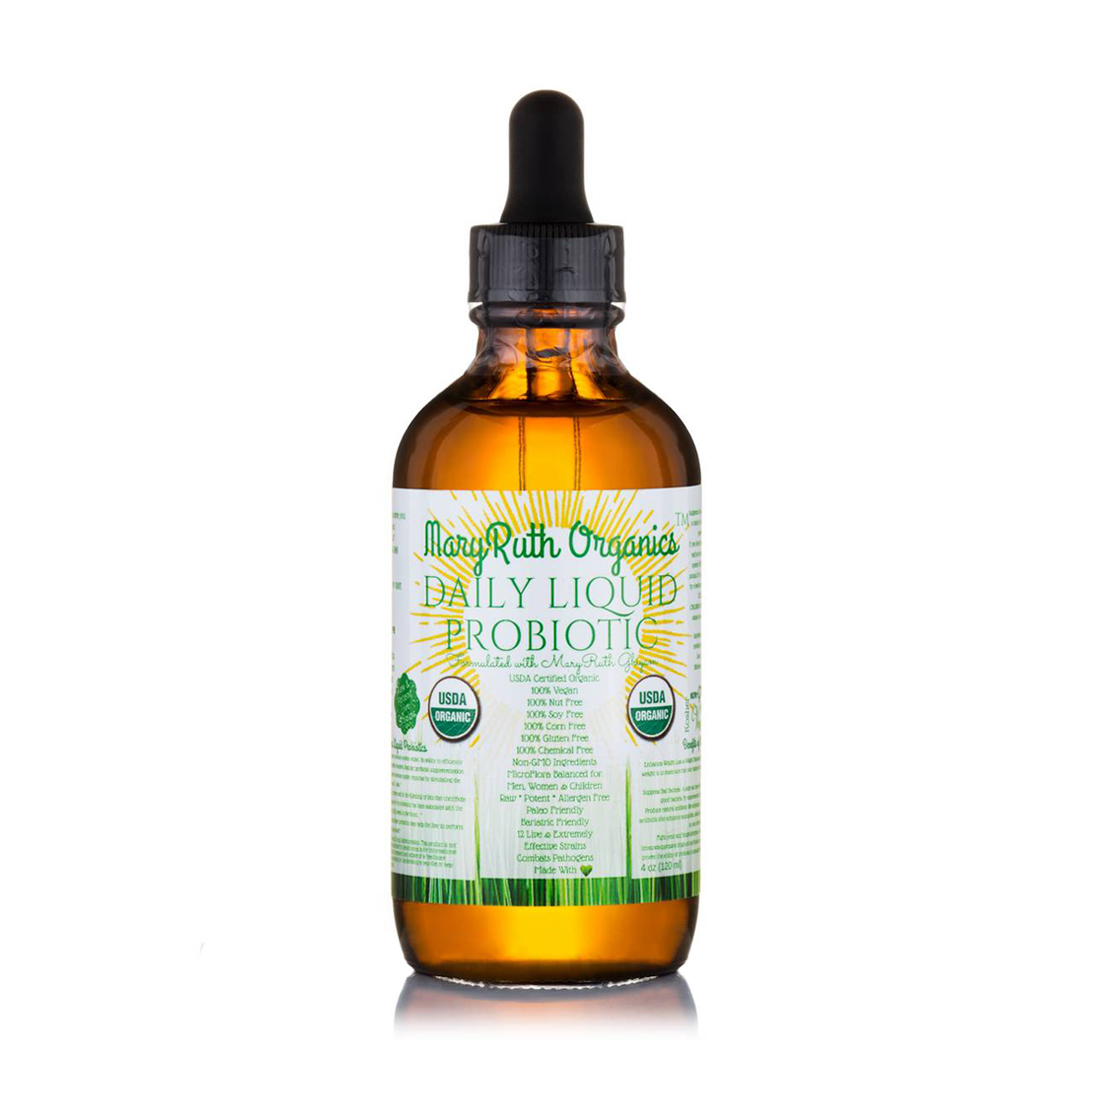 mary-ruth-organics-vegan-plant-based-liquid-probiotic-120ml-bottle-front